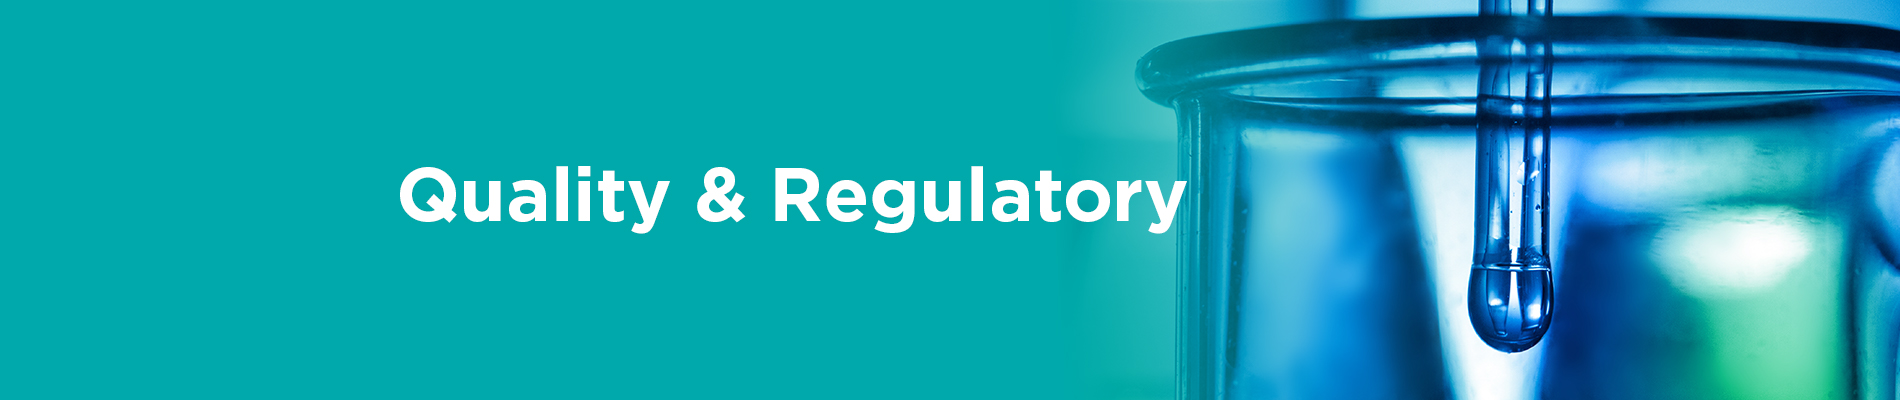 2021 ISPE Best of Pharma Series: Quality & Regulatory Banner